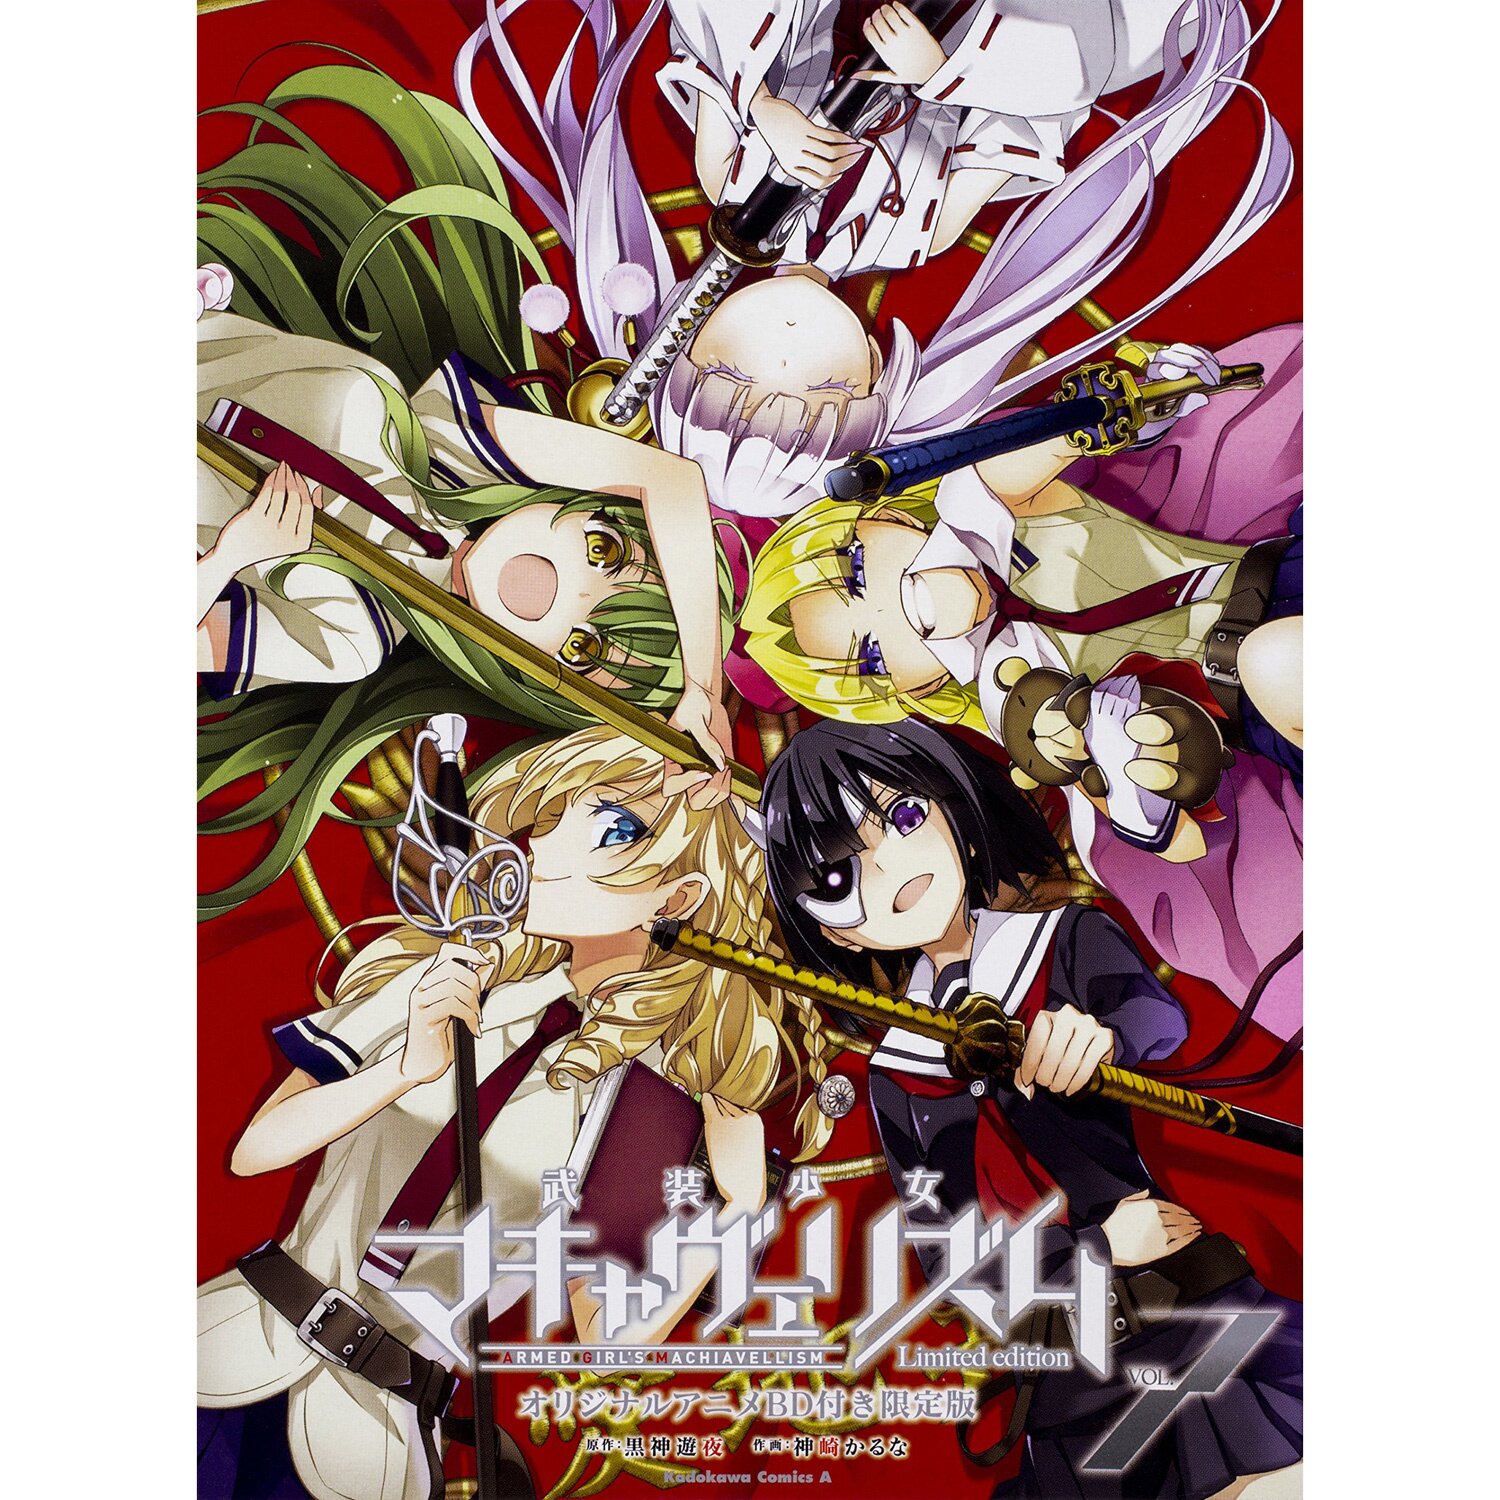 Armed Girl's Machiavellism Vol. 7 Limited Edition w/ Original Anime Blu-ray  Disc - Tokyo Otaku Mode (TOM)